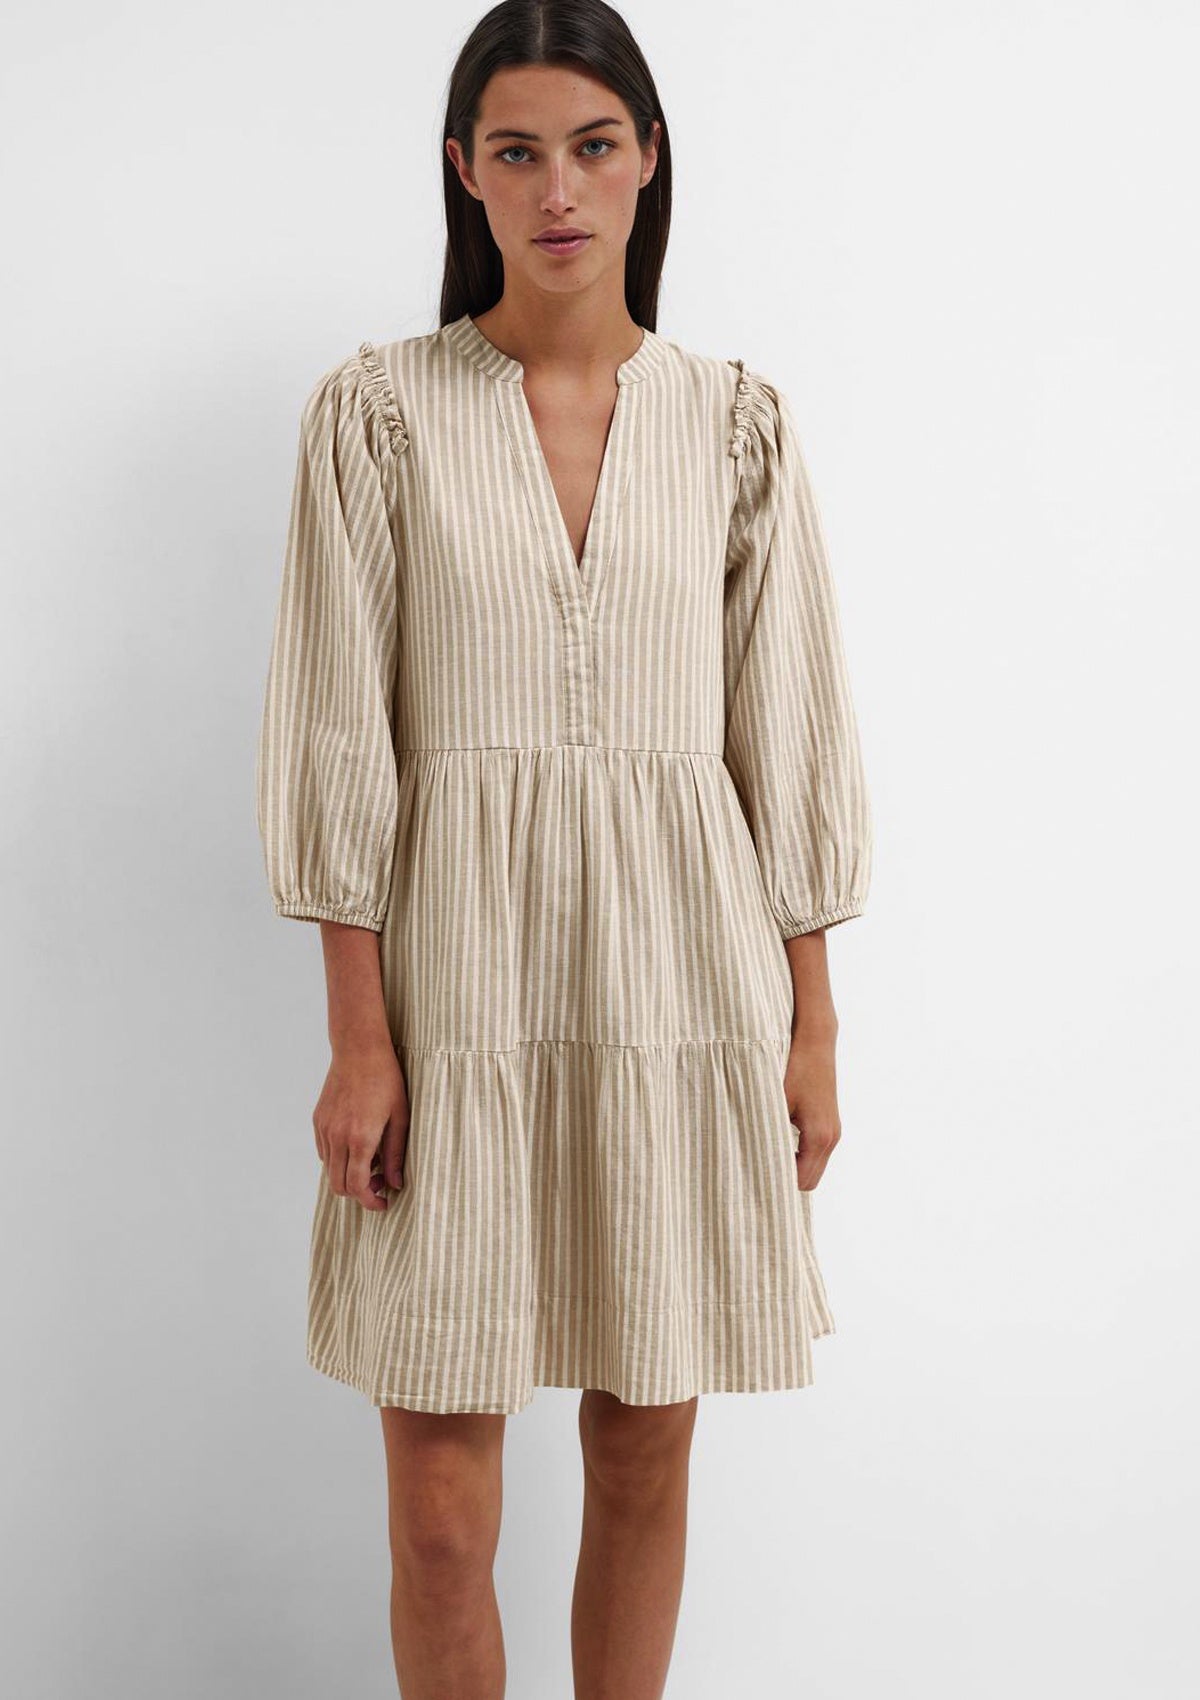 Selected Femme Hillie 3/4 Striped Linen Dress